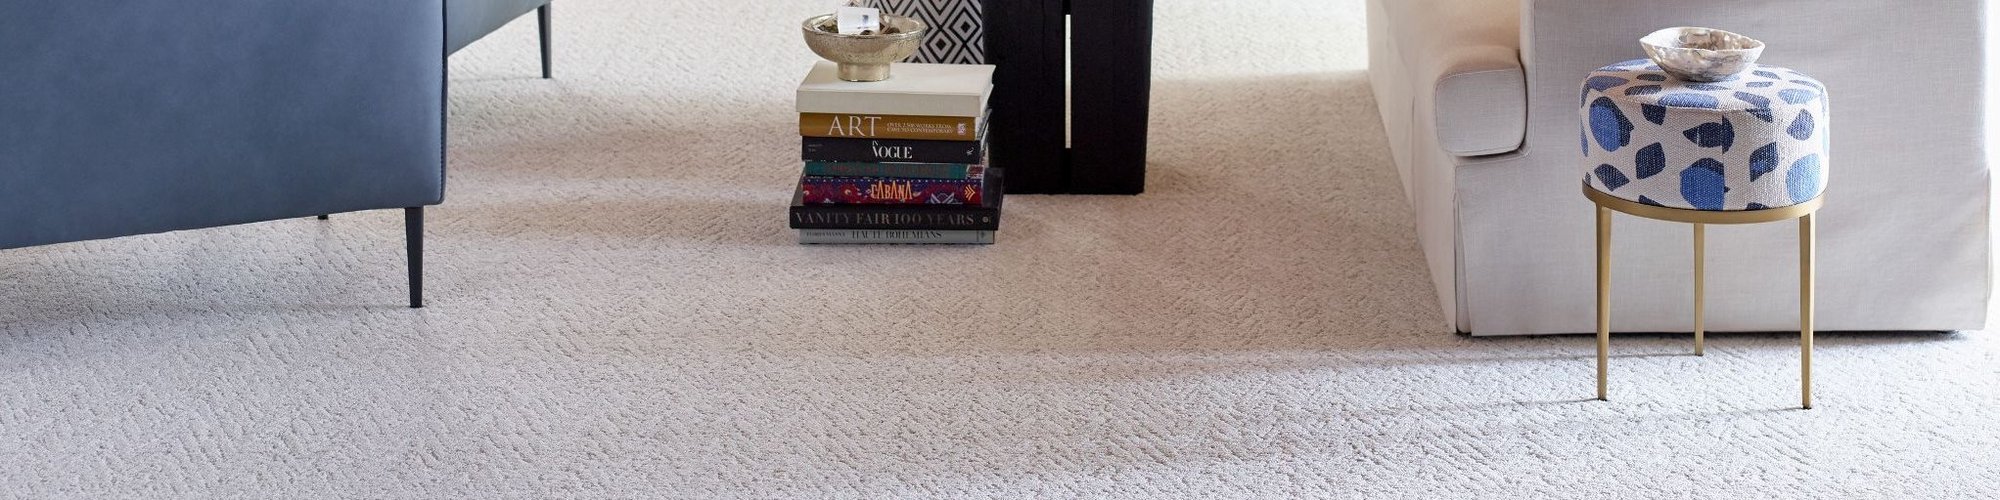 modern living room with carpet Peoples Signature Flooring Austin Texas